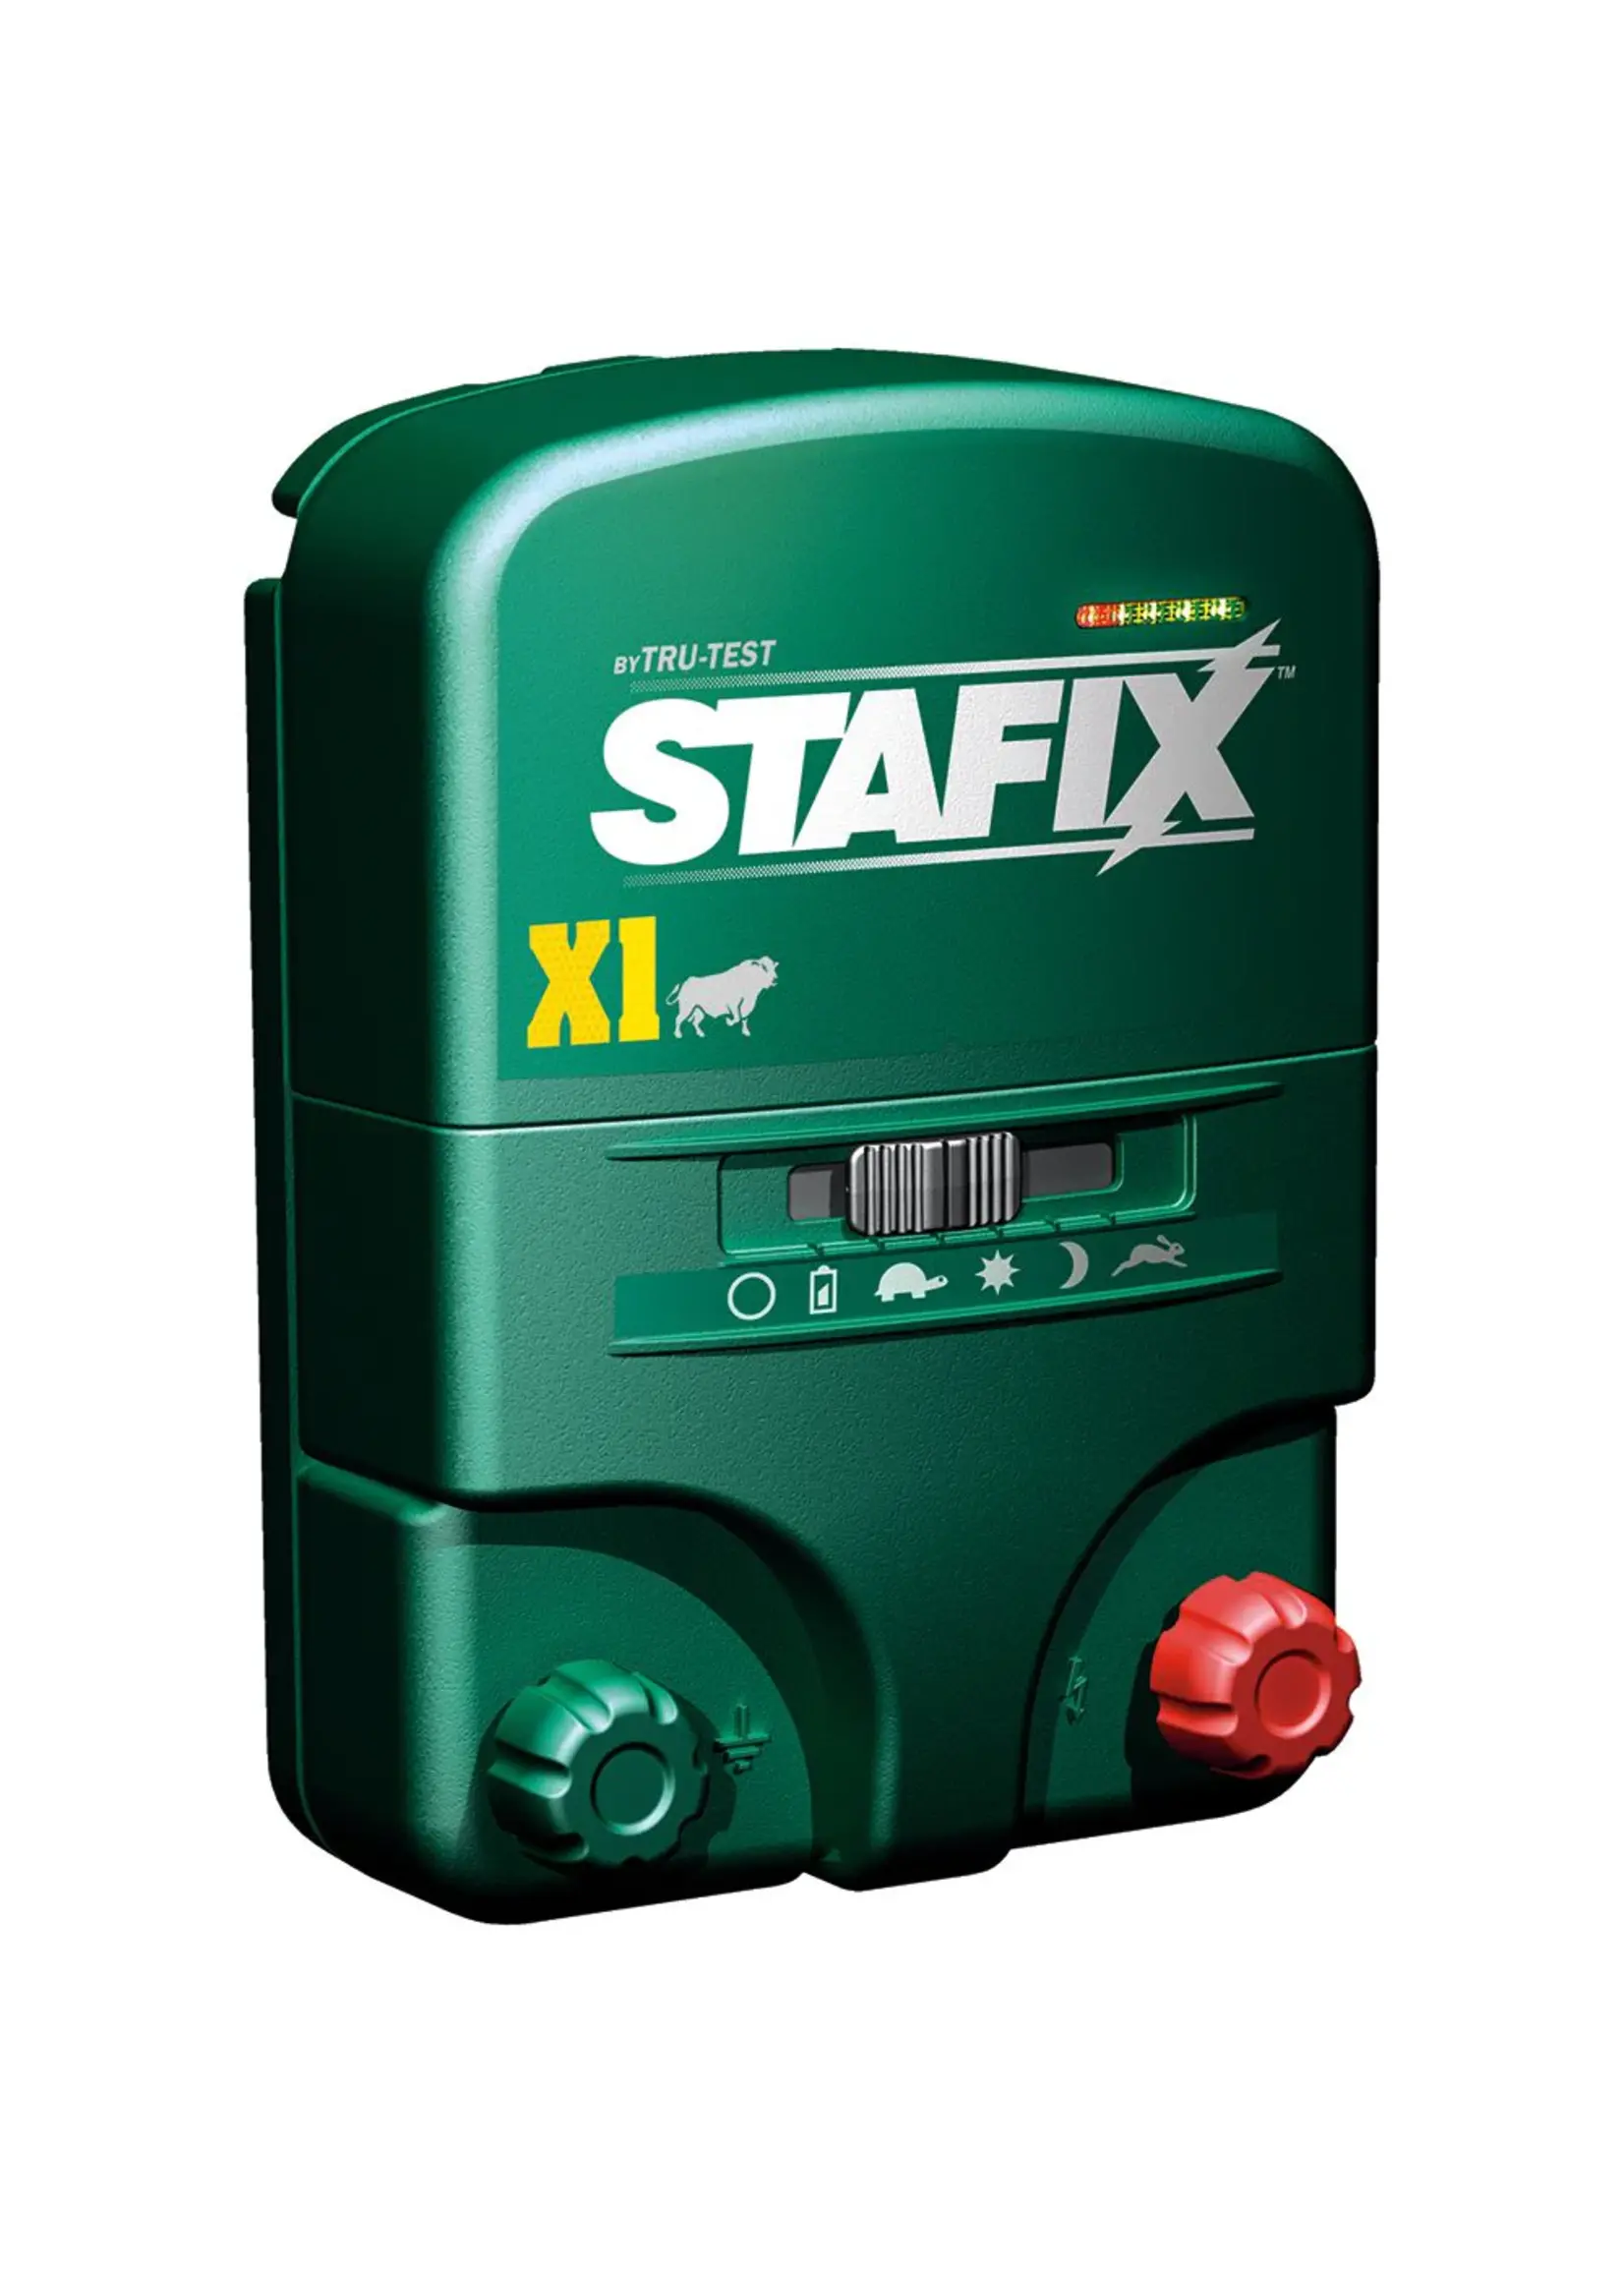 Stafix Bundle - Stafix X1 Energizer + Stafix Tape Gate Kit